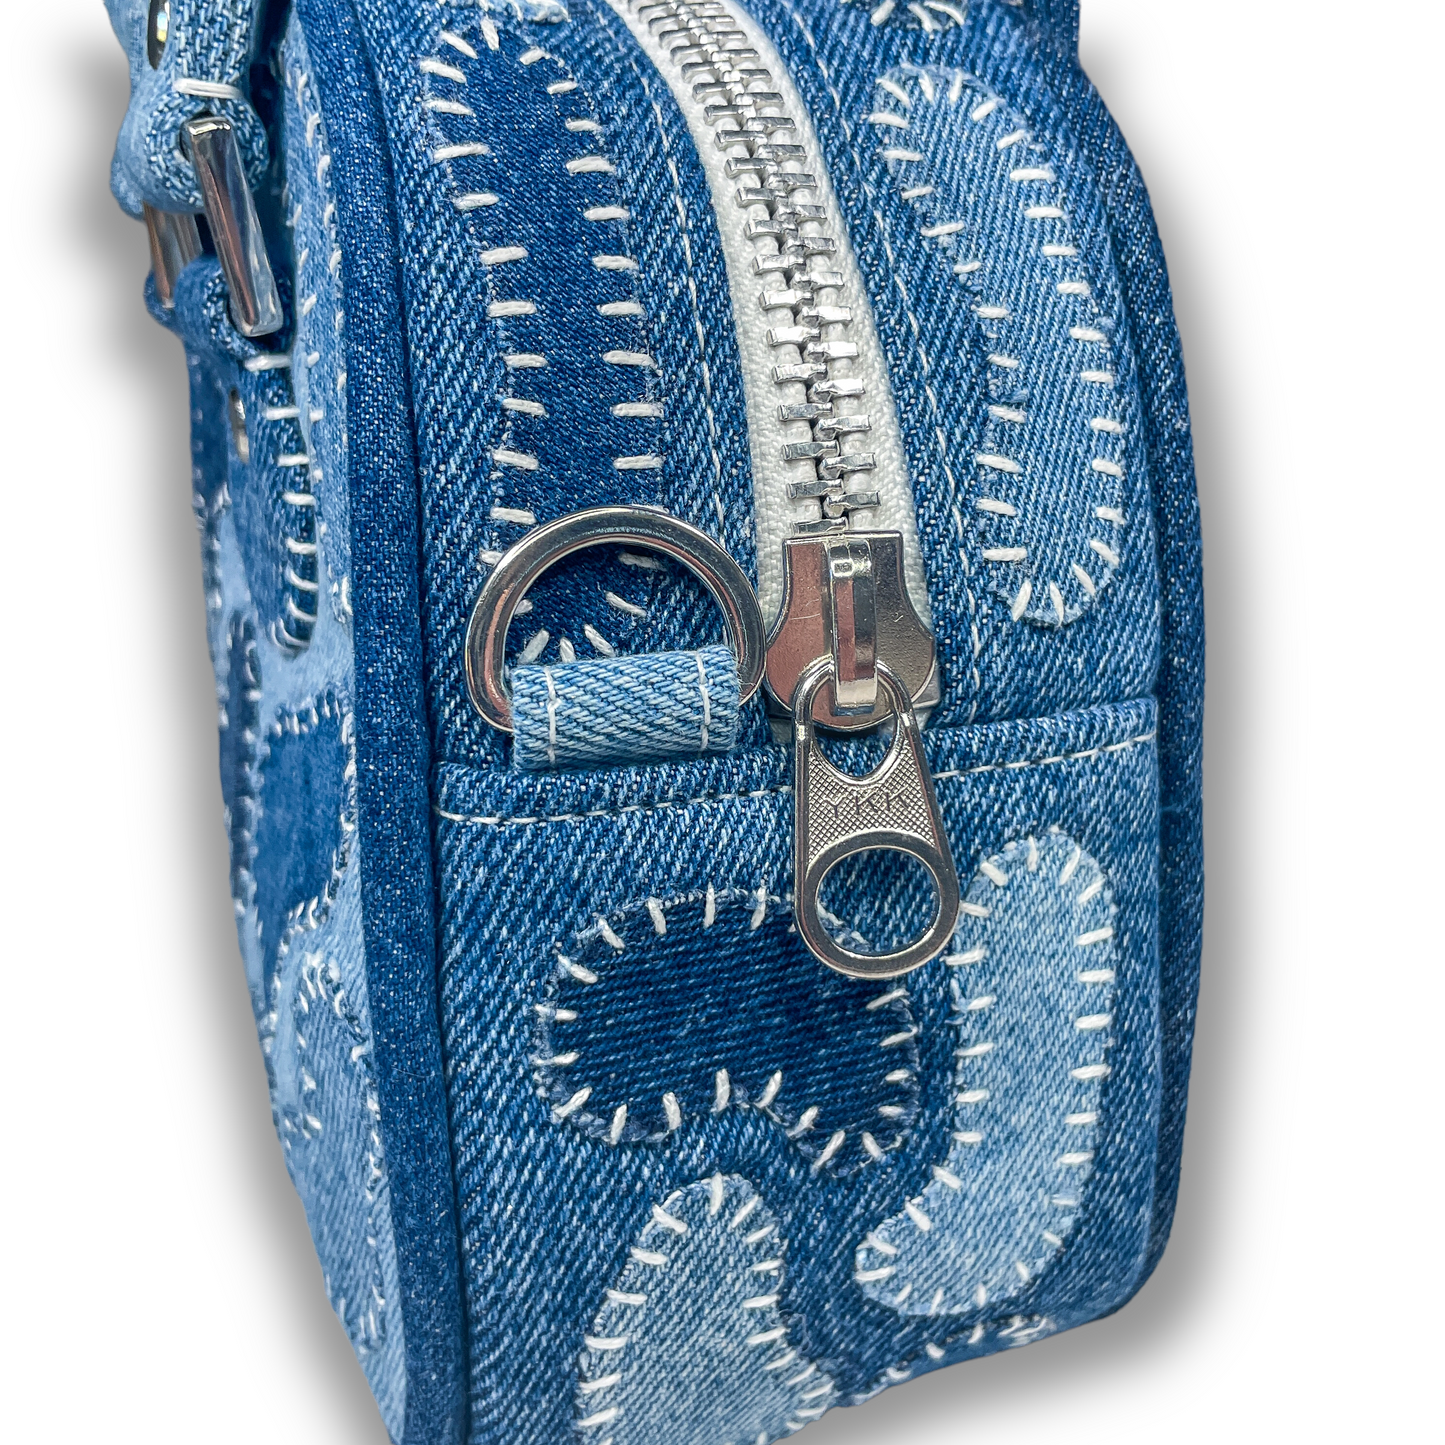 Bowler Handbag Pattern